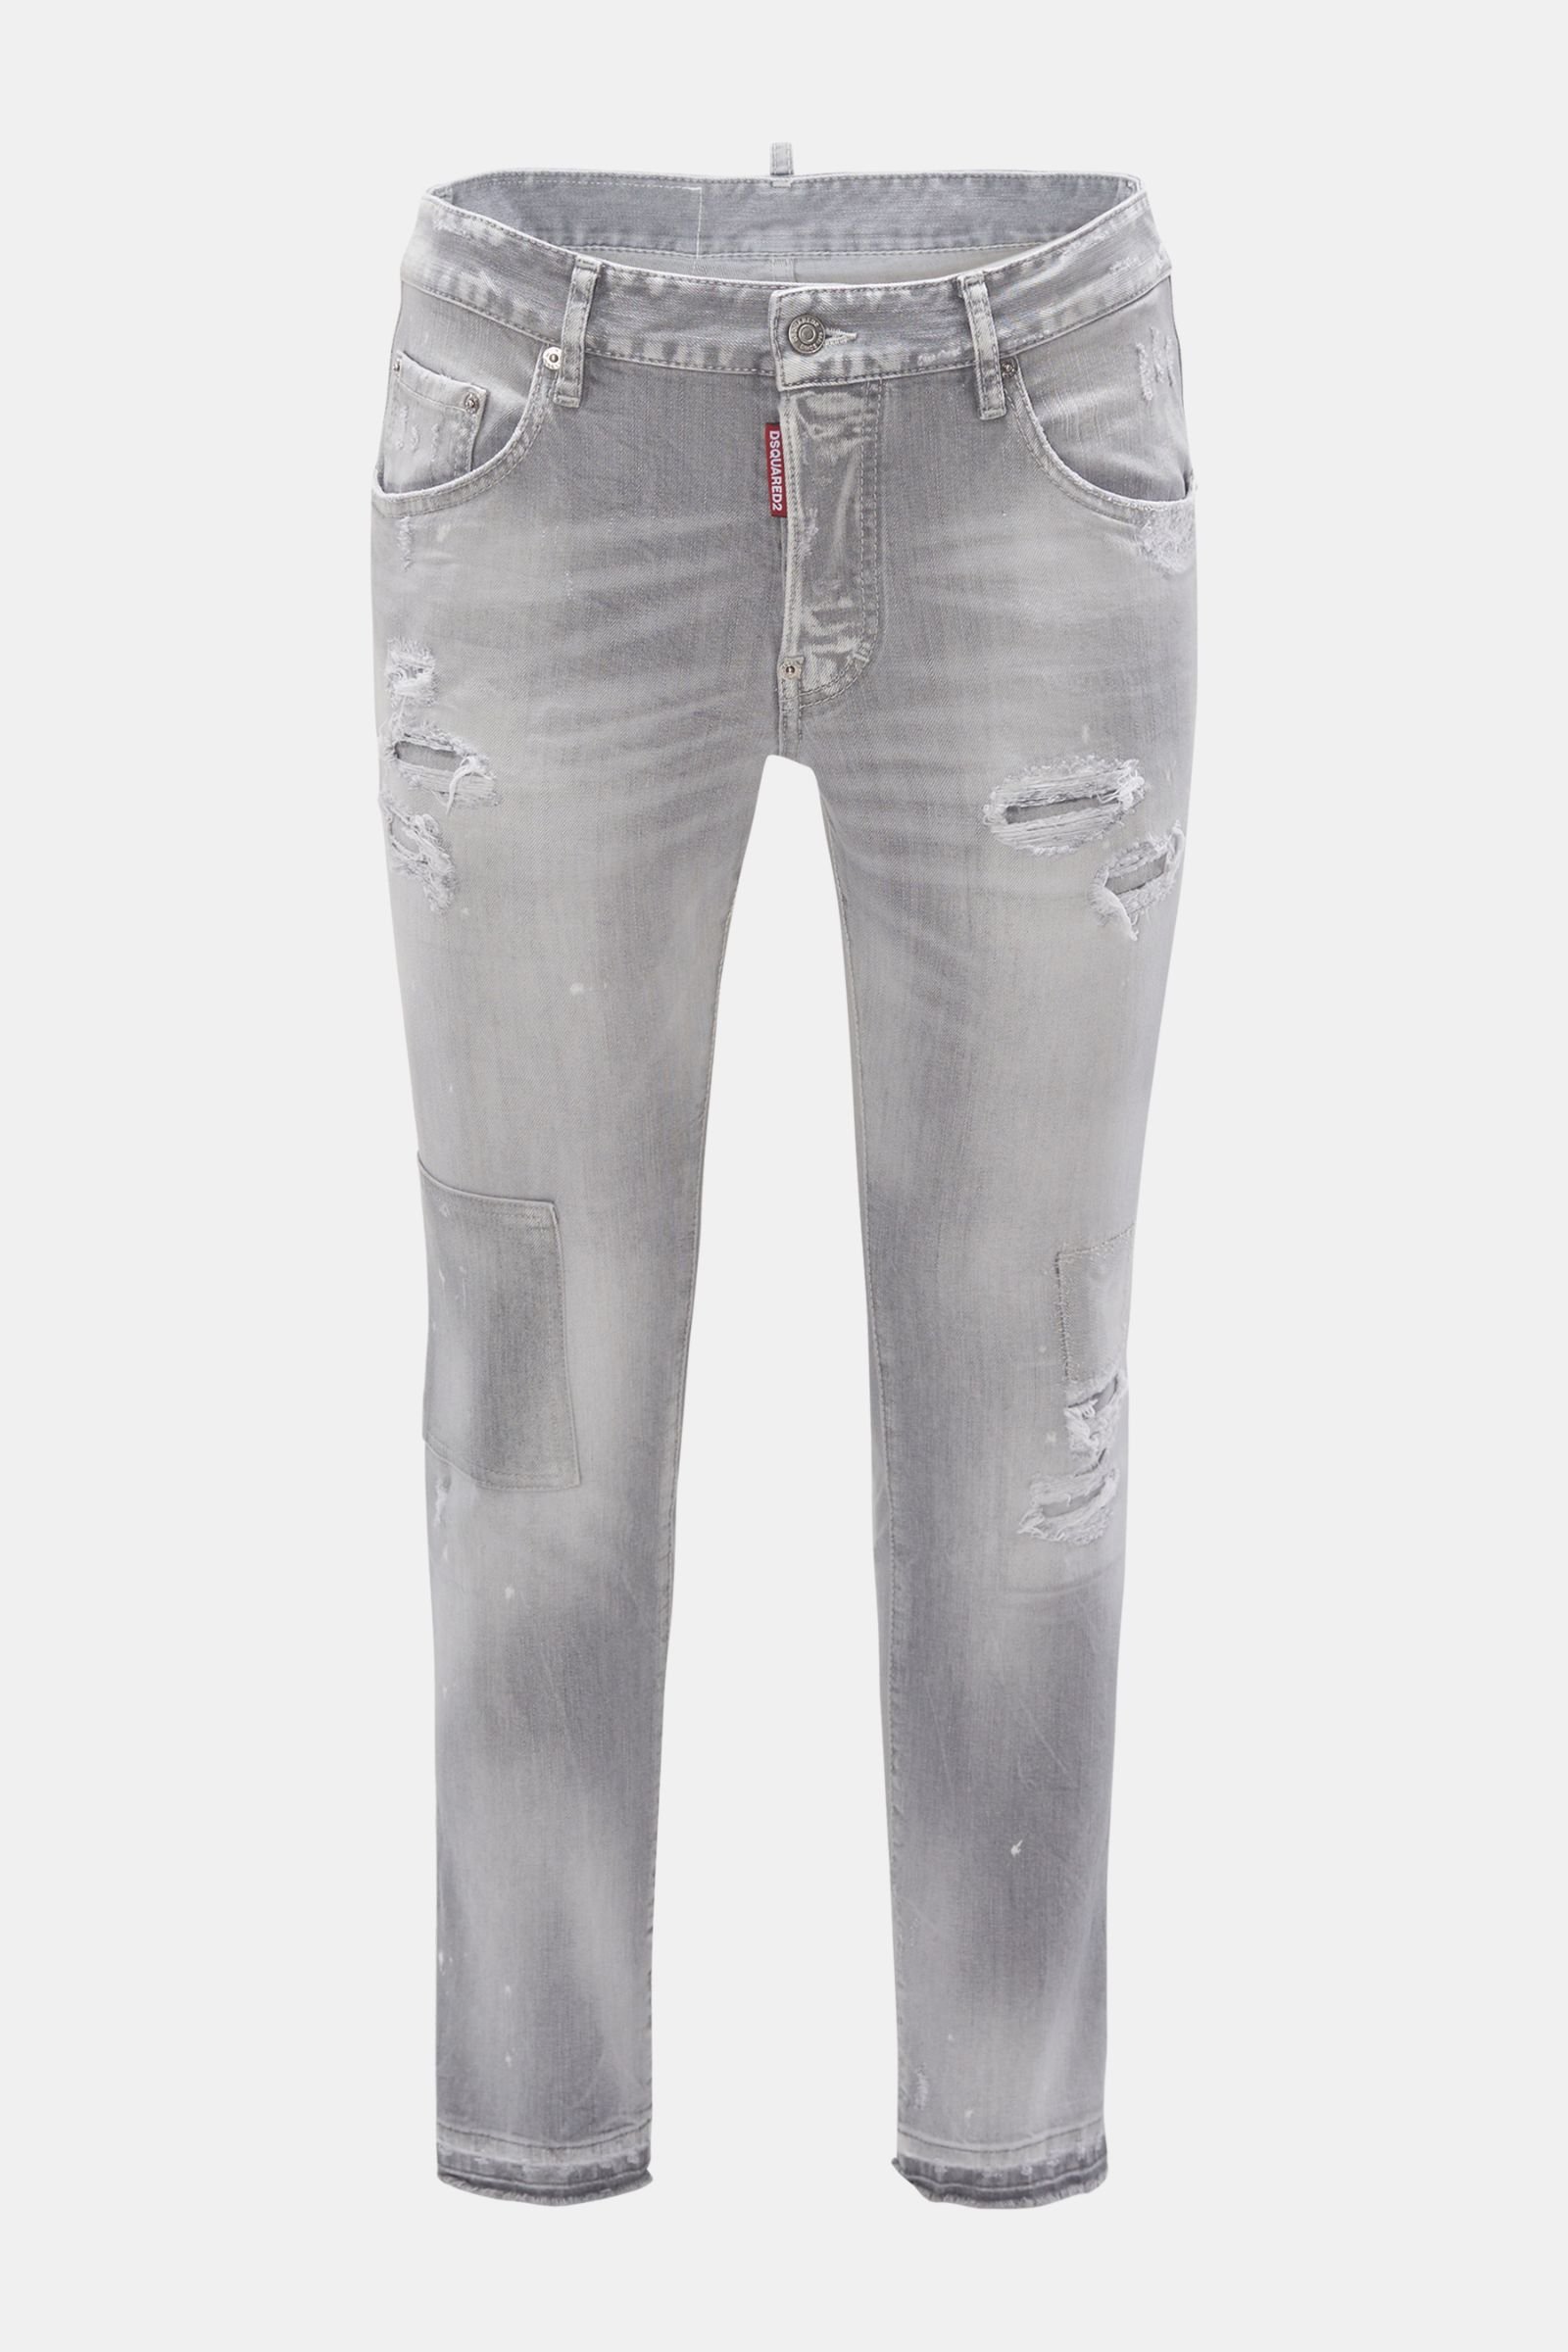 Jeans grey 